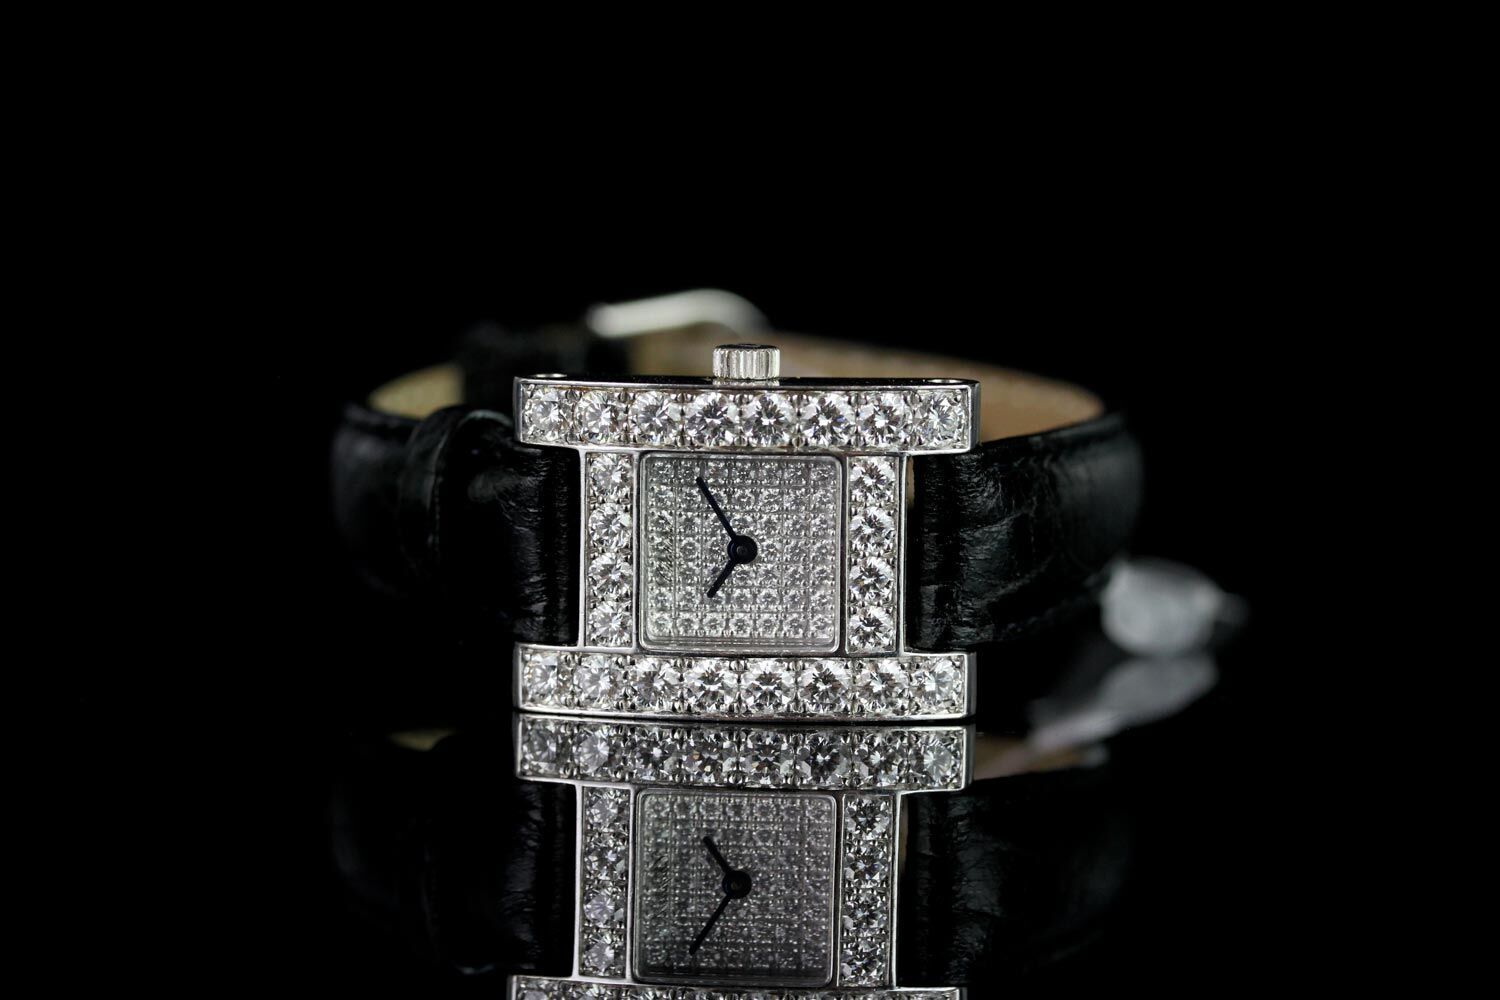 LADIES CHOPARD DIAMOND SET H WRISTWATCH REF 493 1, square pave set diamond dial, diamond set bezel